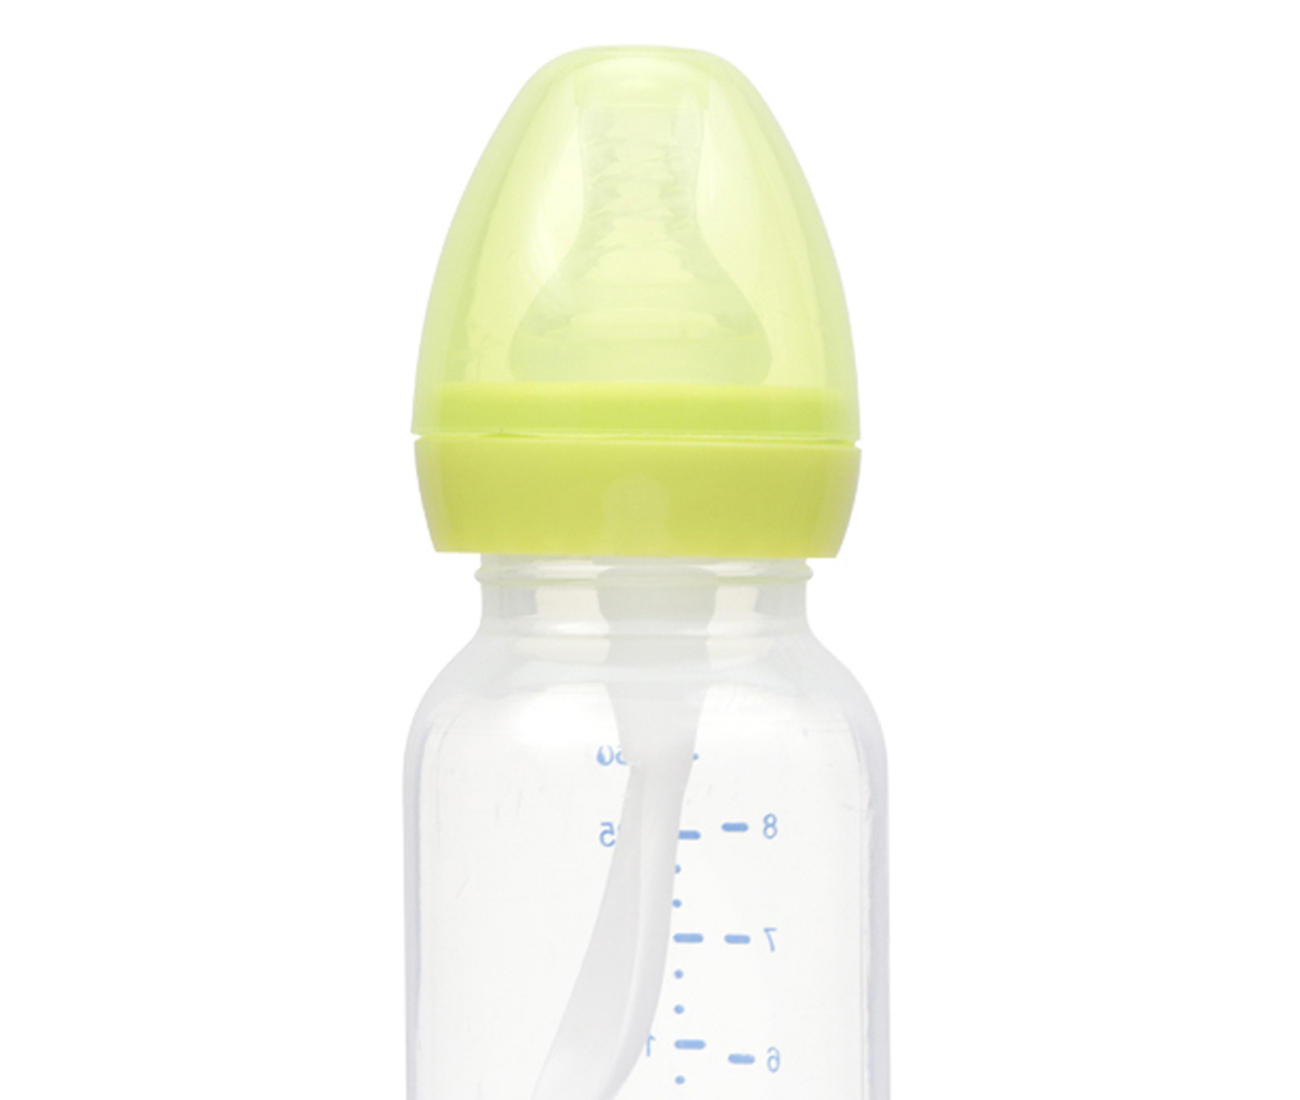 1 baby bottle